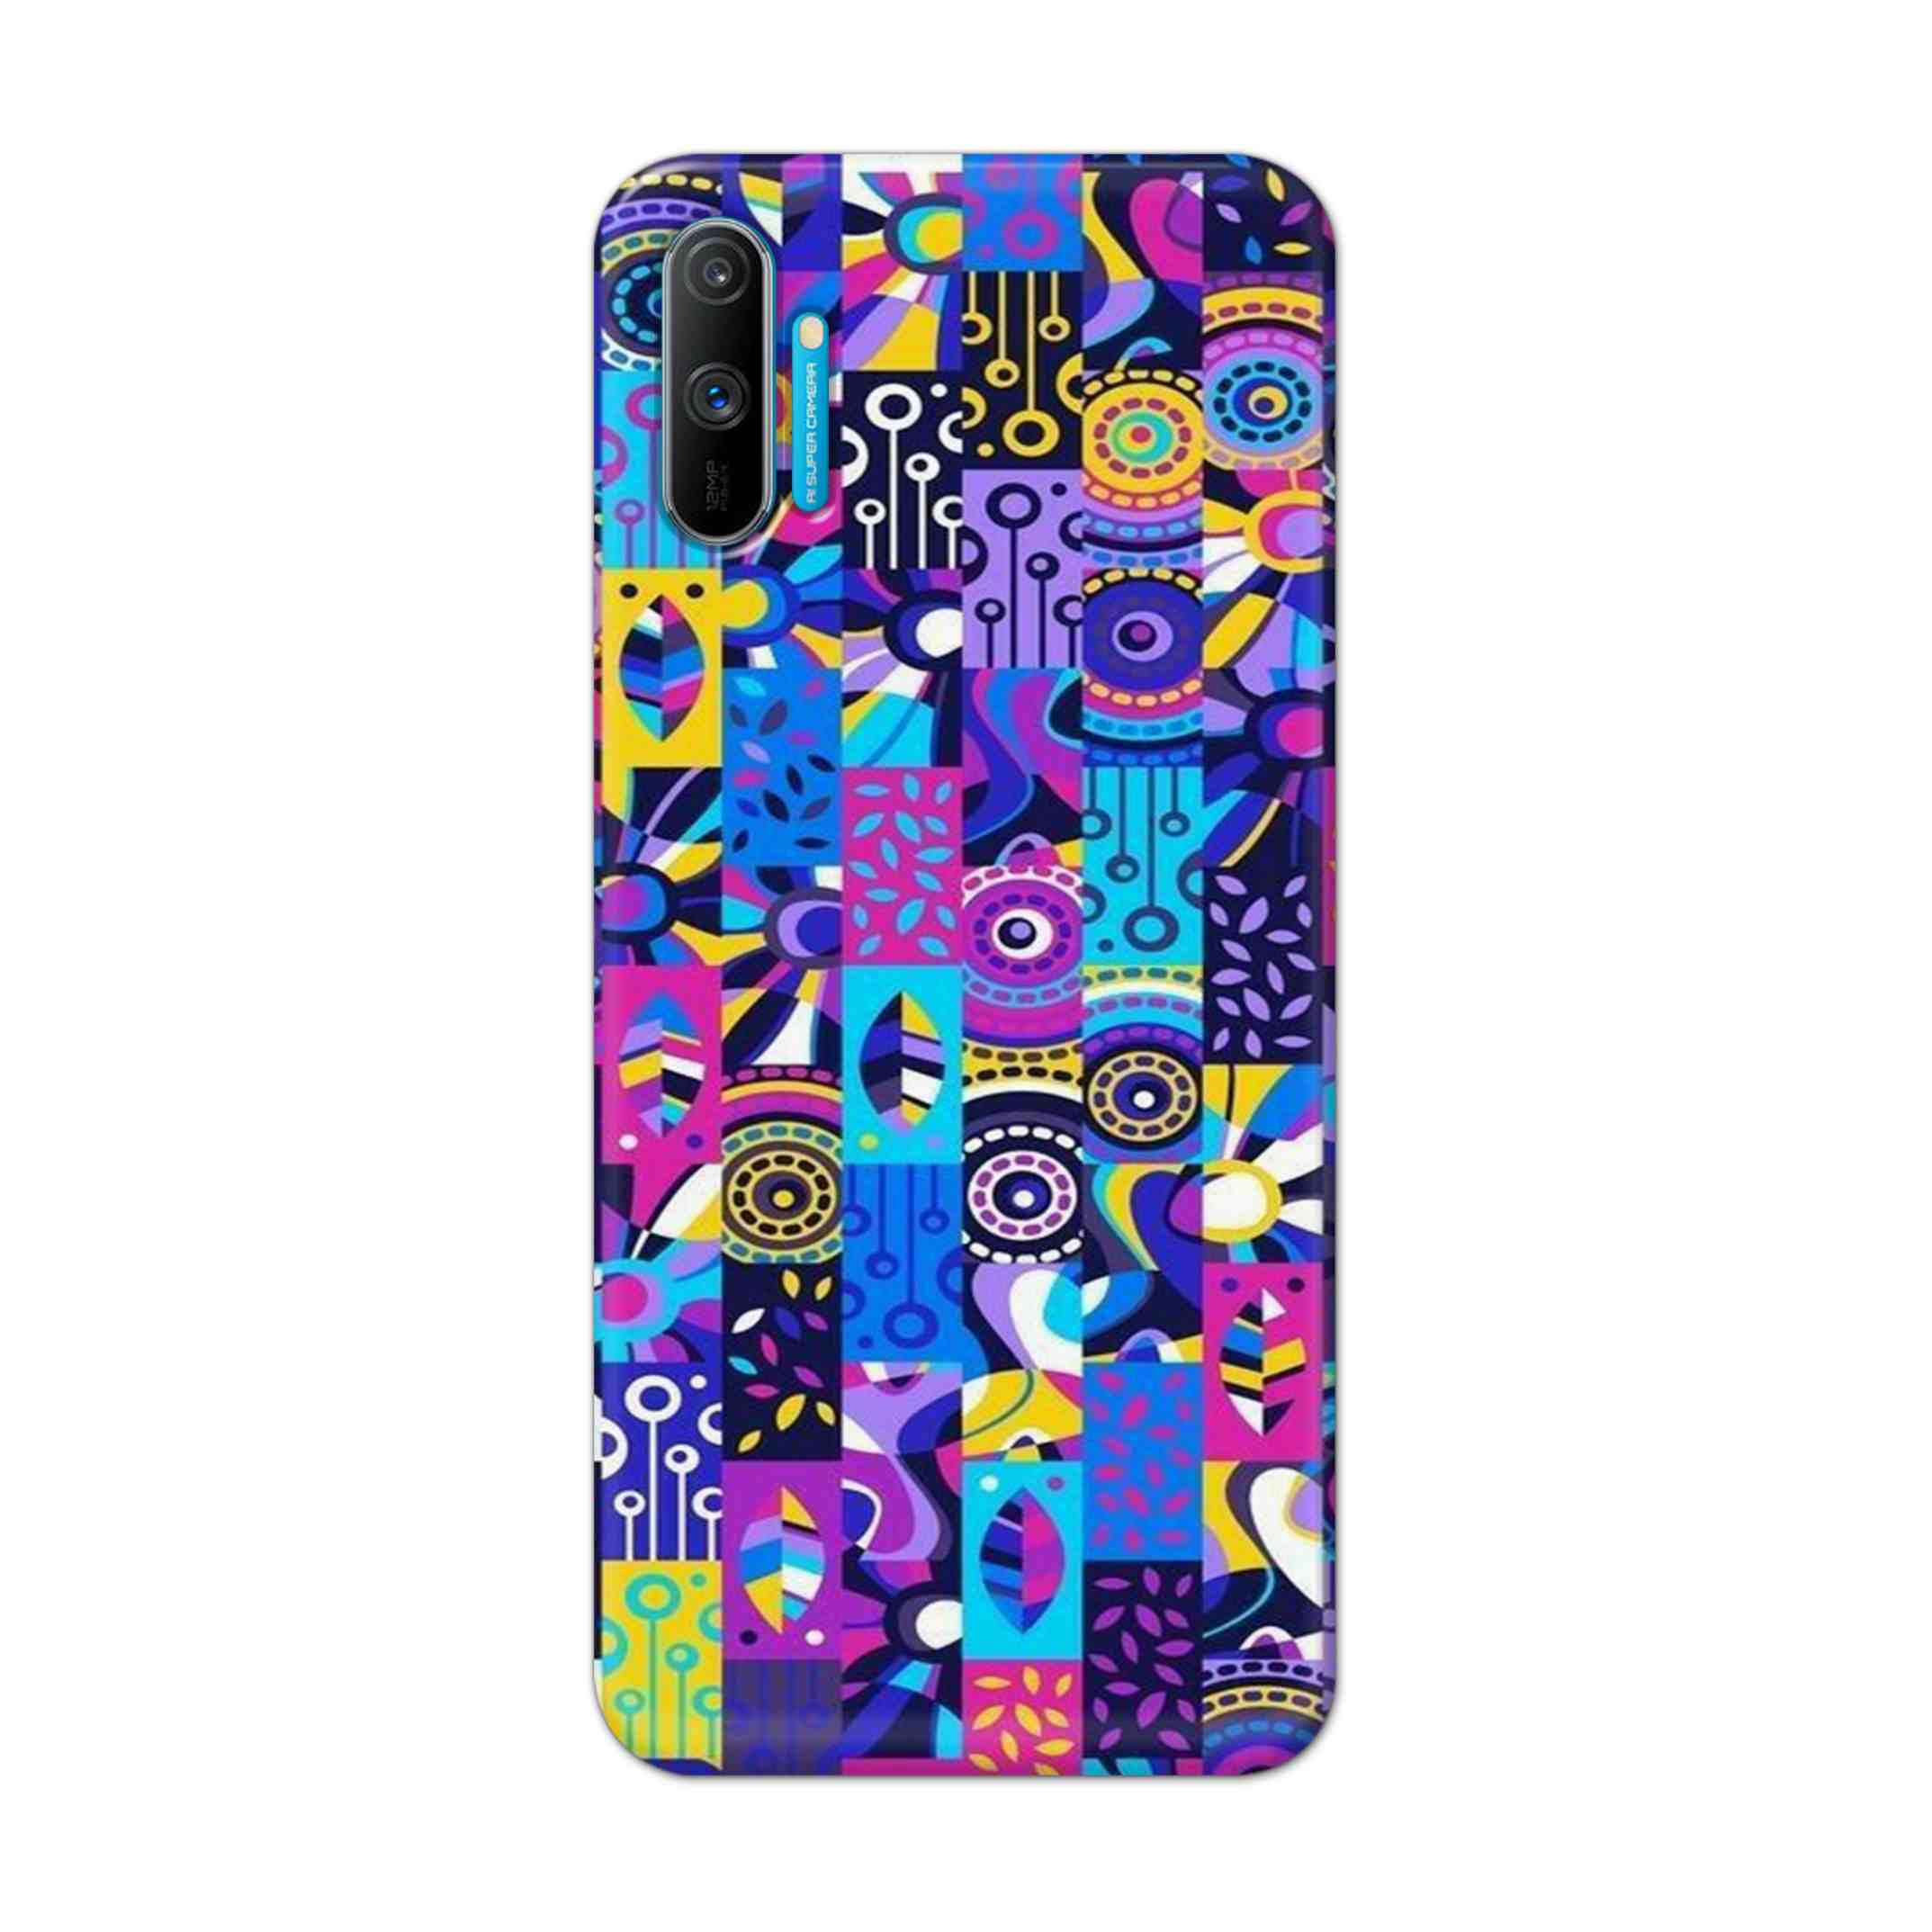 Buy Rainbow Art Hard Back Mobile Phone Case Cover For Realme C3 Online